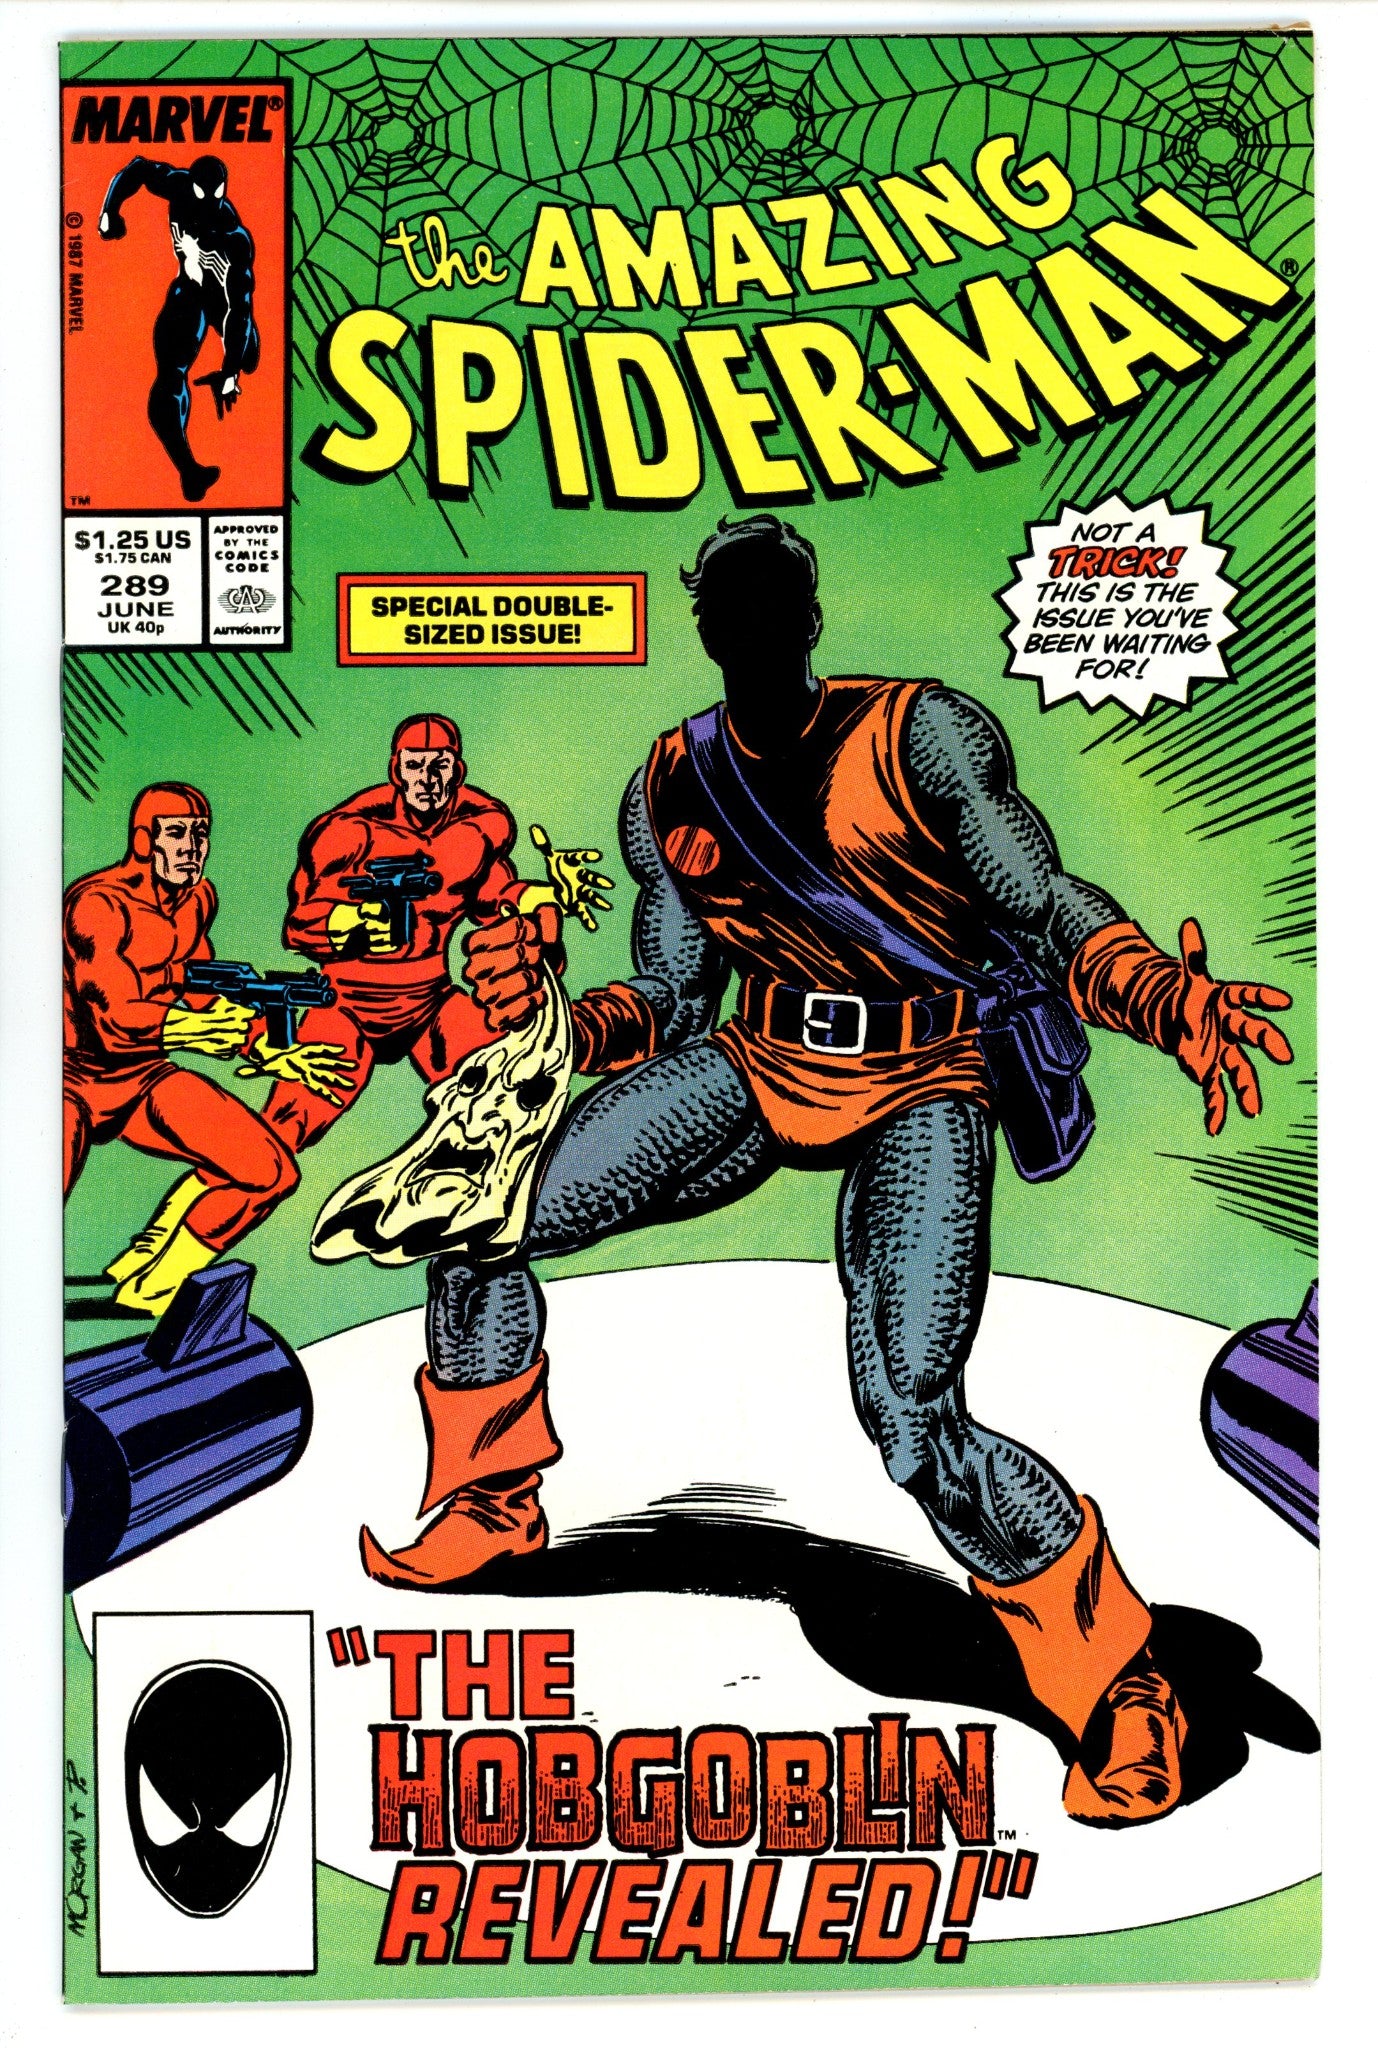 The Amazing Spider-Man Vol 1 289 VF (8.0) (1987) 